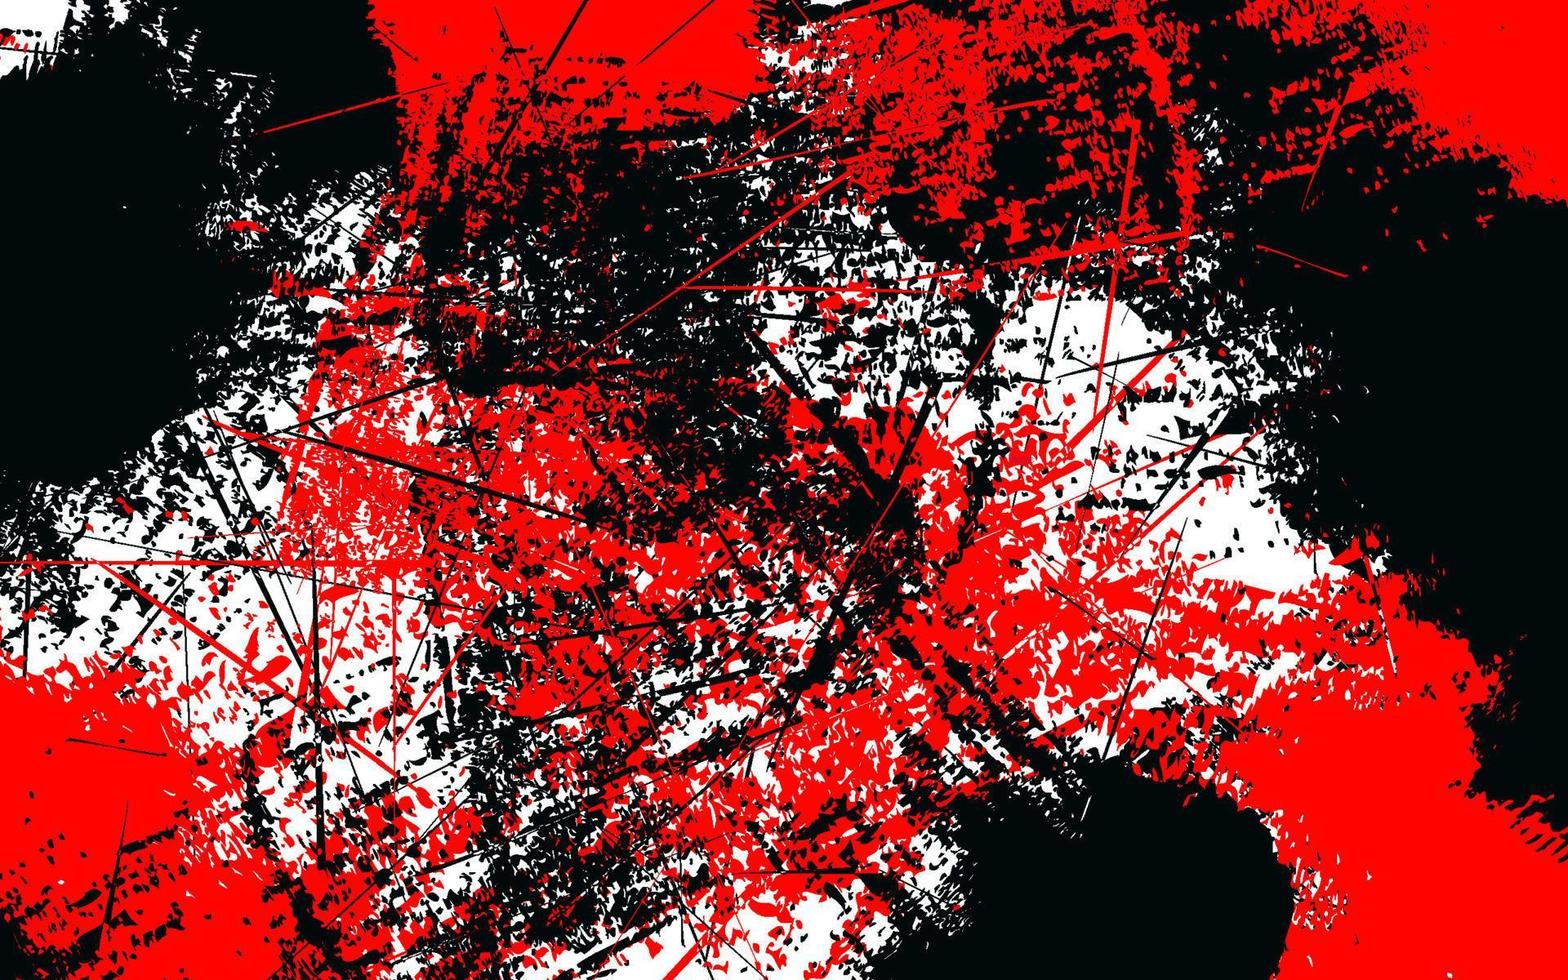 abstrato grunge textura respingo tinta fundo preto, vermelho e branco vetor